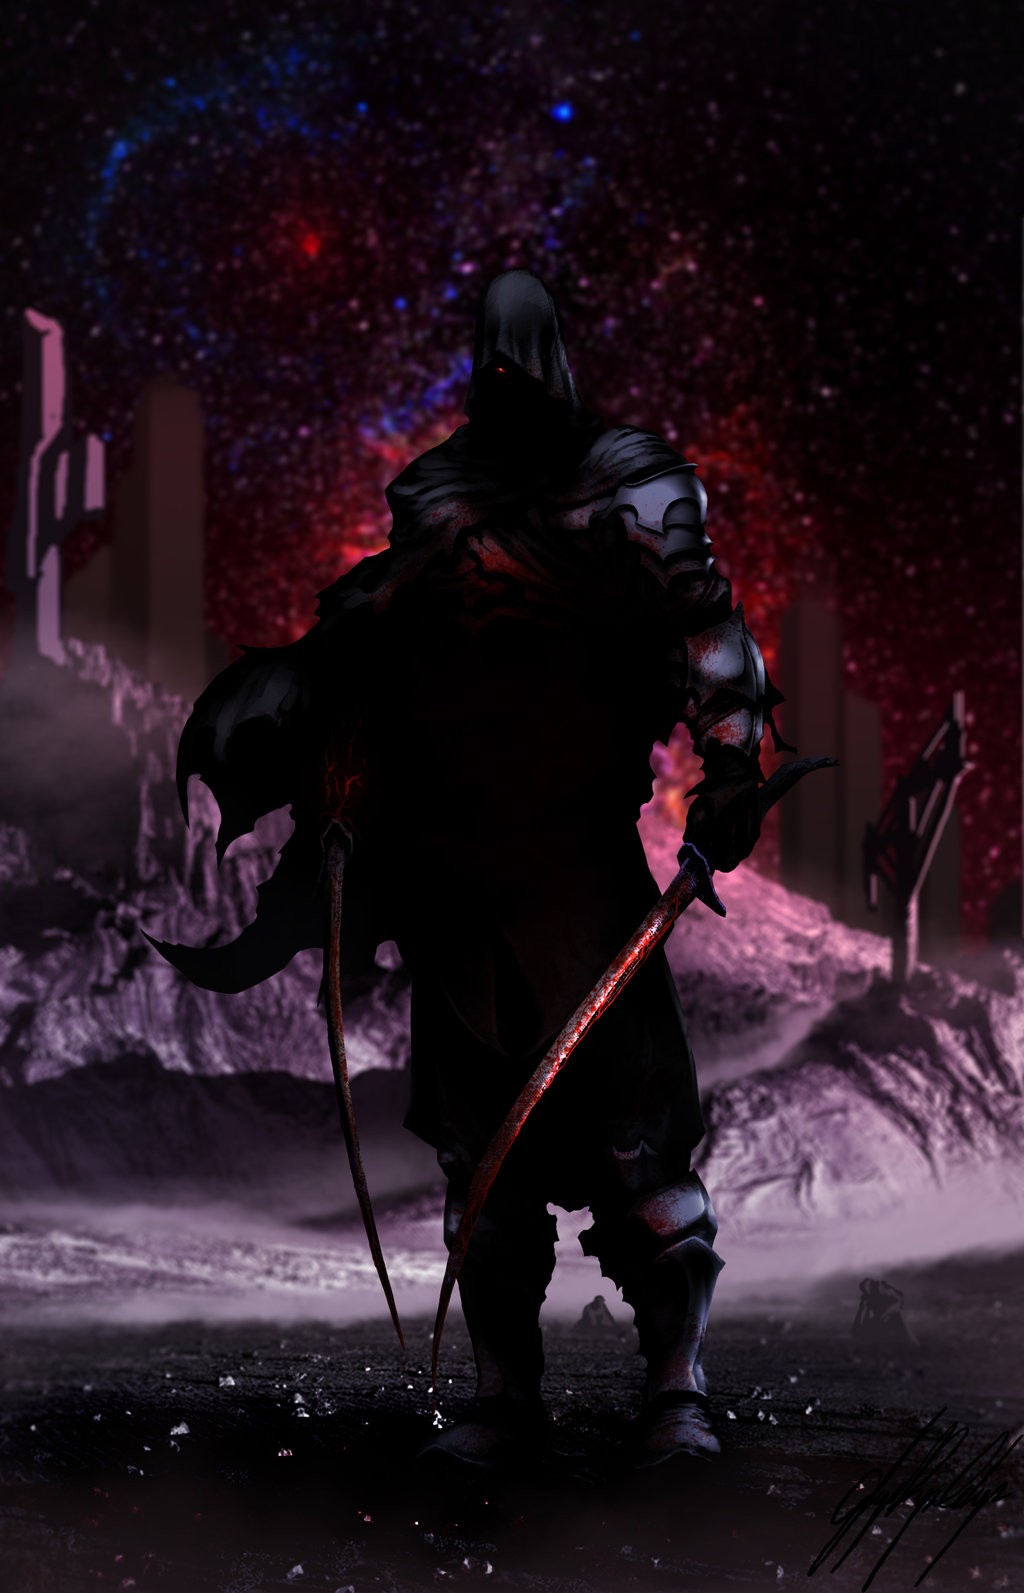 General 1024x1593 Skyrace dark fantasy art DeviantArt blood sword weapon